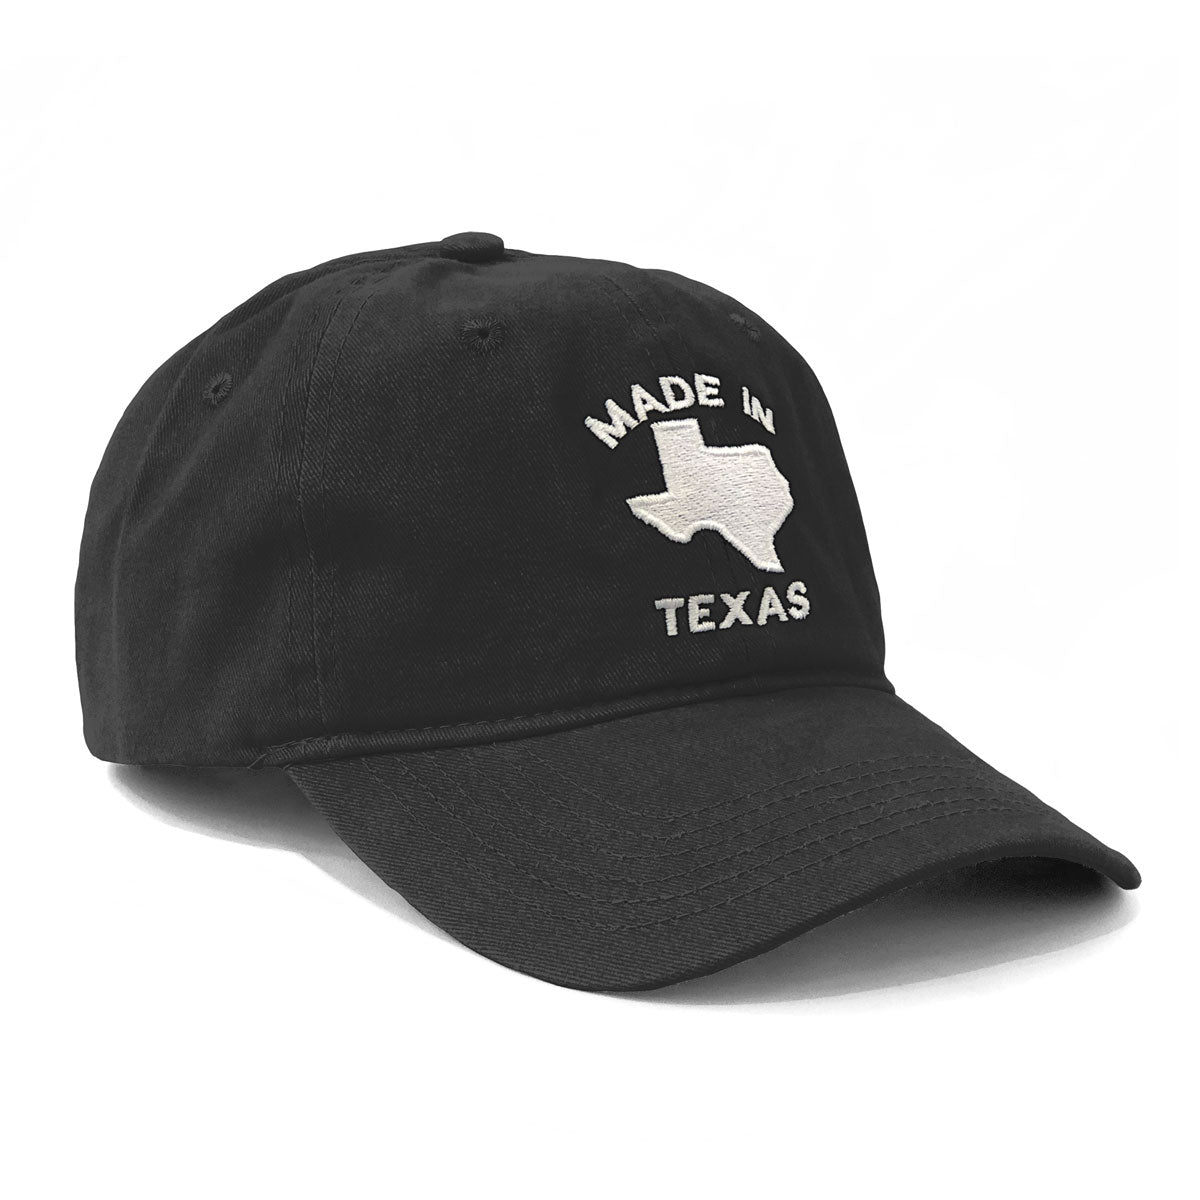 Made in Texas Cap